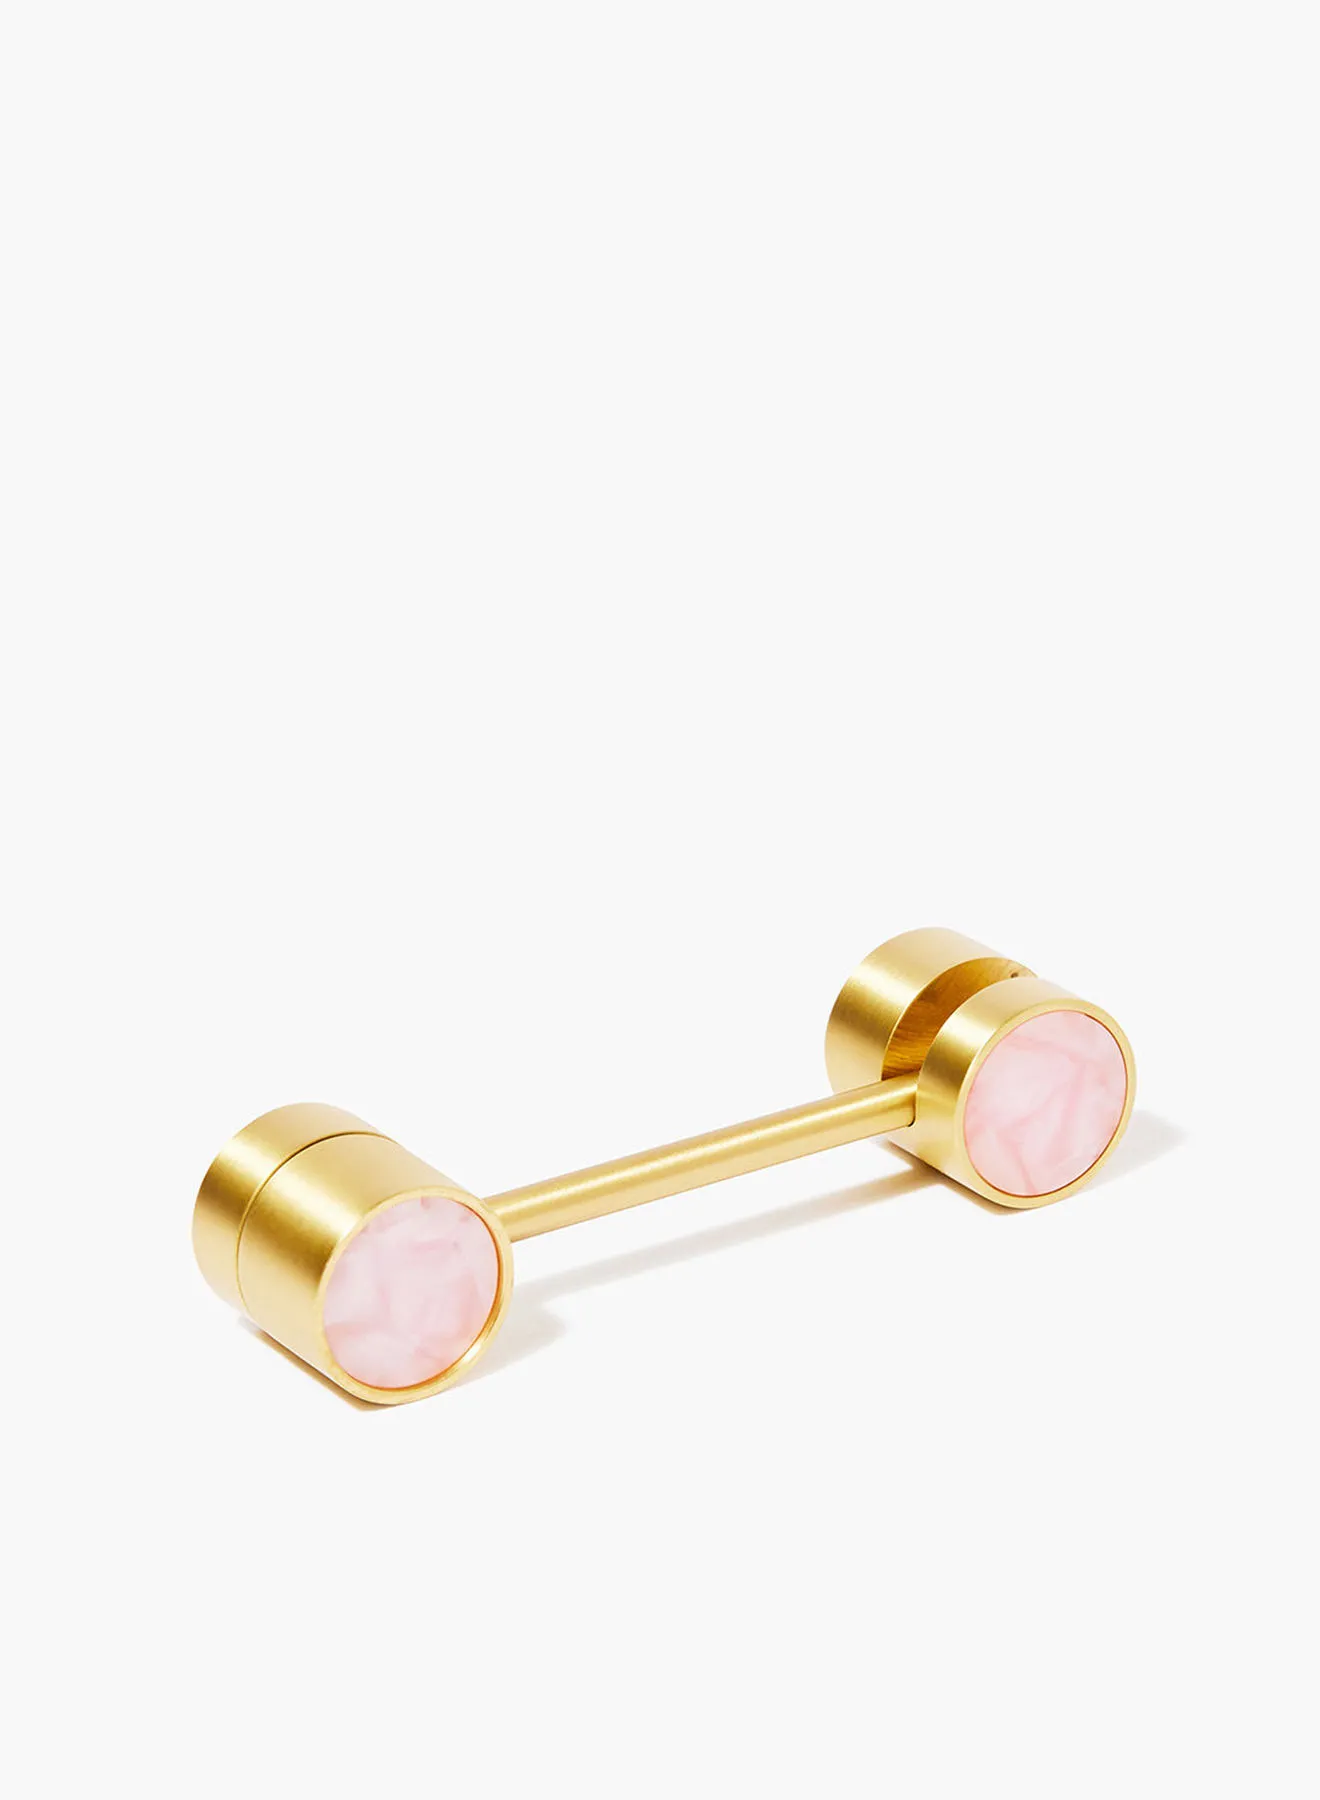 Amal Nordic Style Cabinet Drawer Pulls Knob Latch Peachy Pink/Brass 84 x 26 x 28millimeter